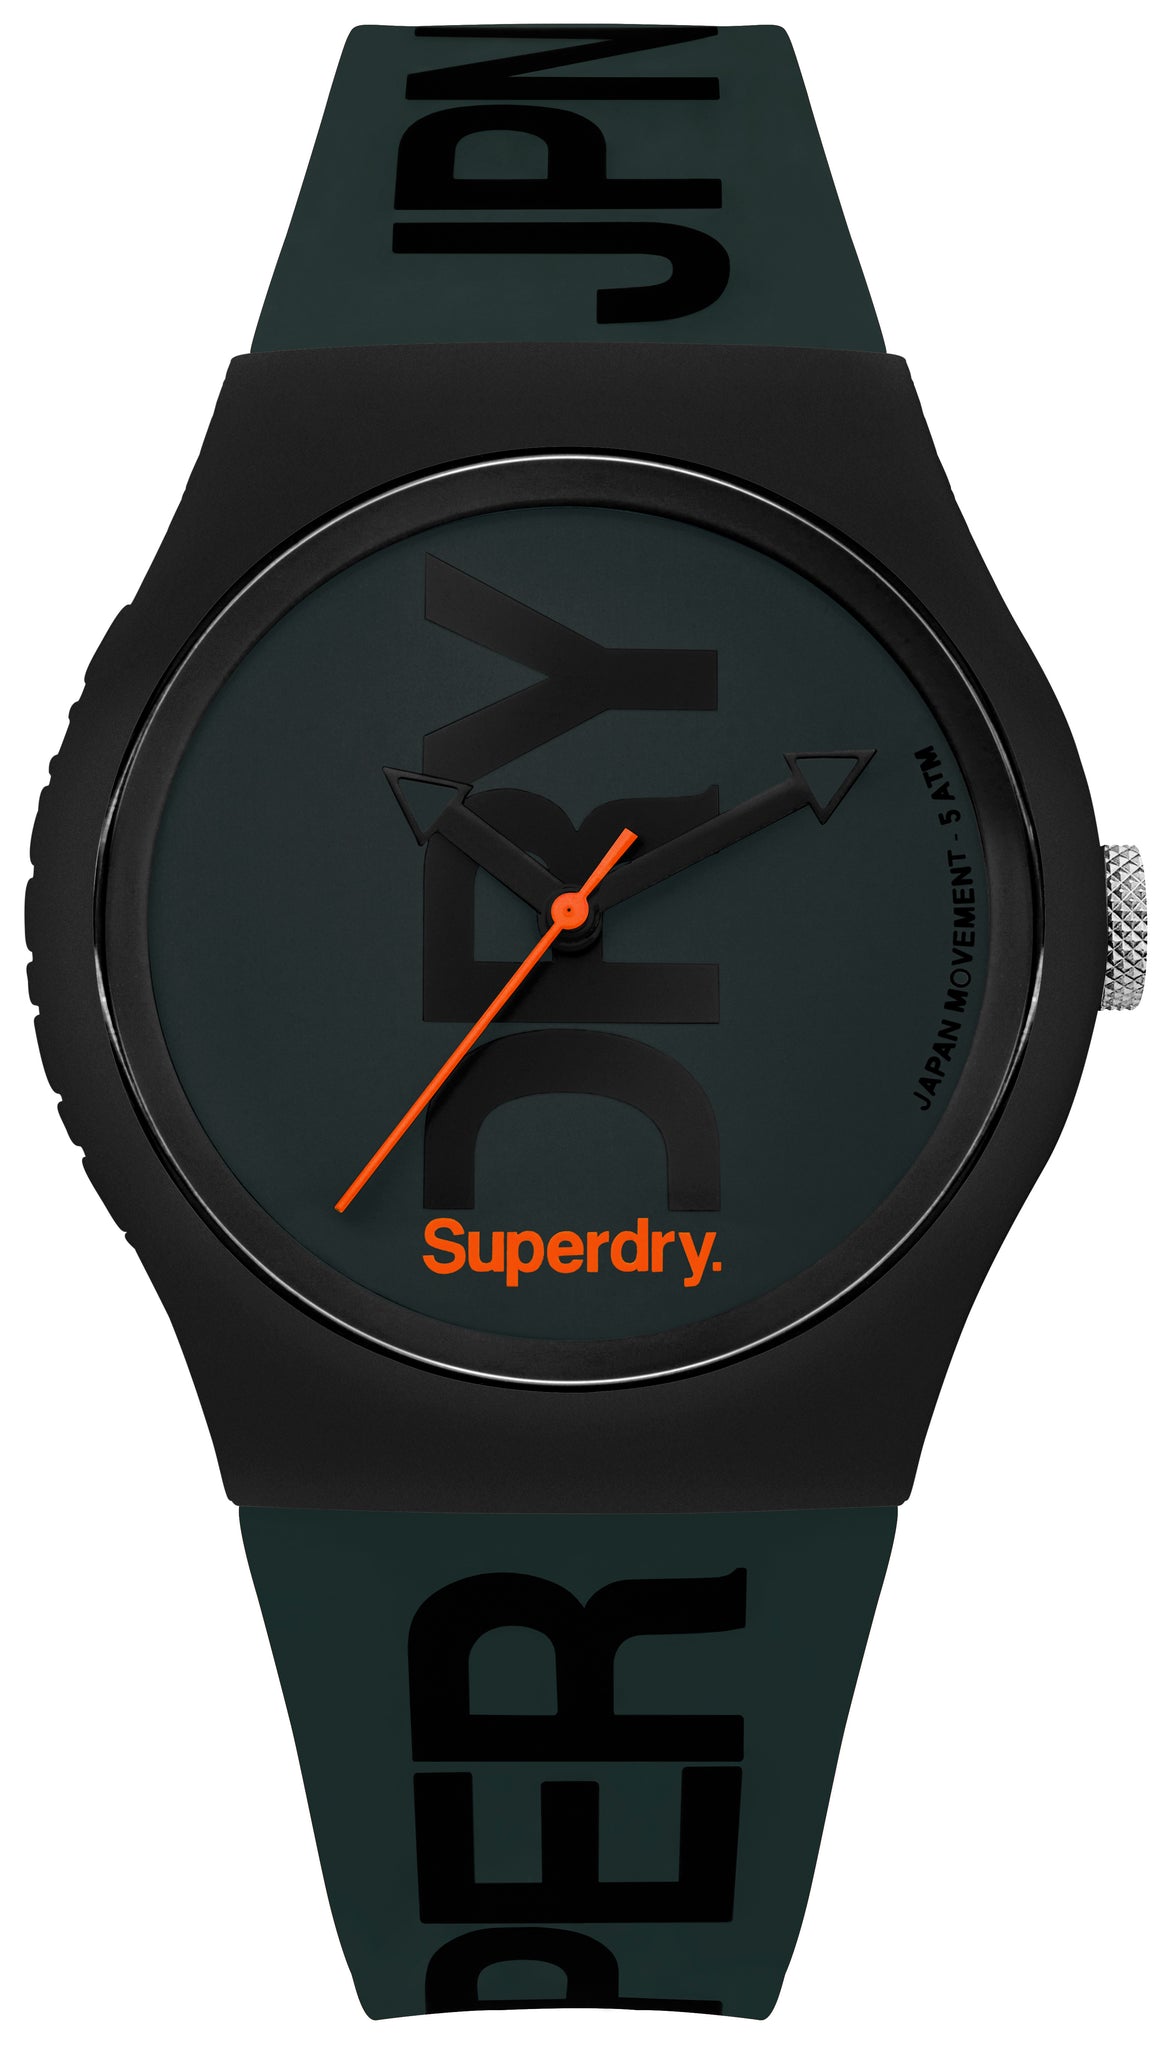 Vintage Superdry Watch - Etsy